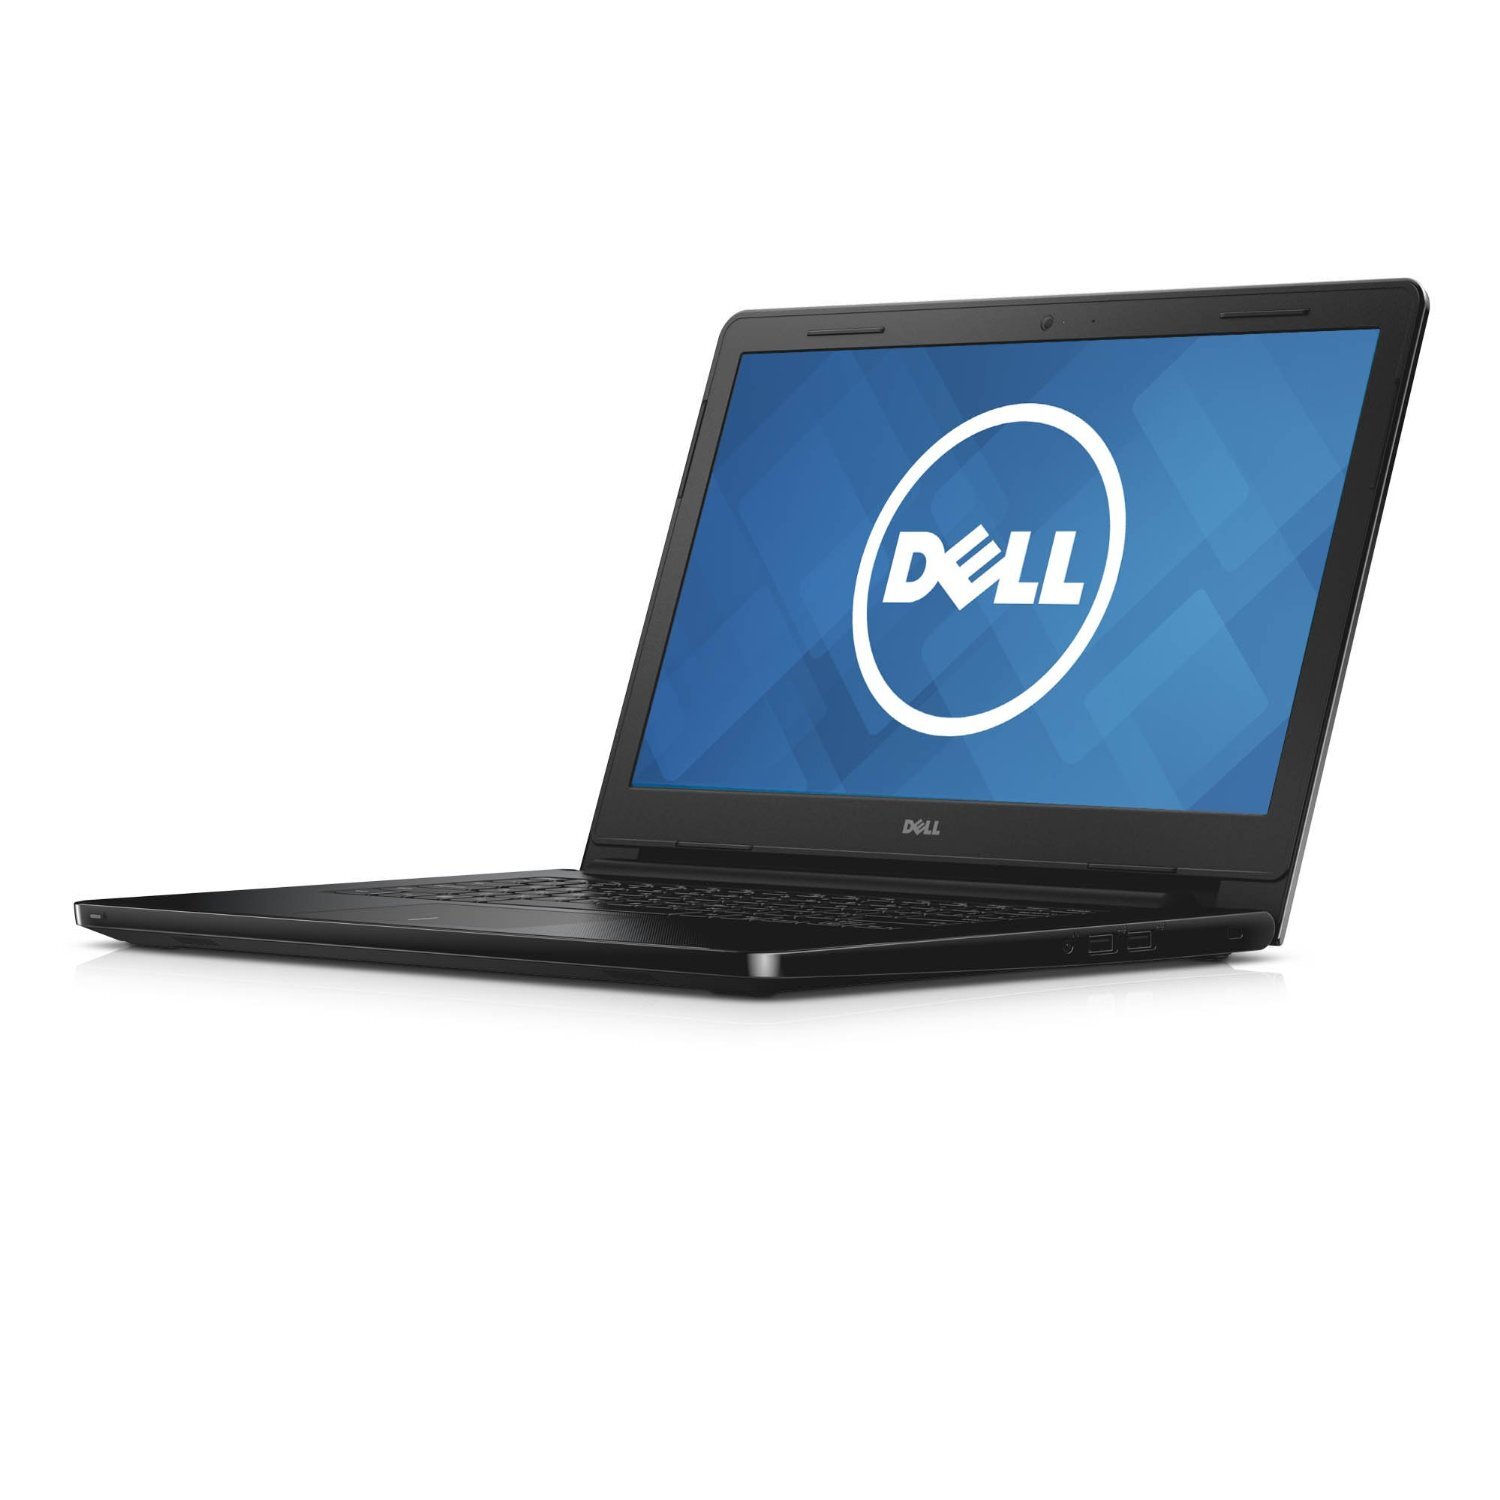 Laptop Dell Inspiron 3458 70071888 - Intel Core i3-5005U, 4GB RAM, HDD 500GB, Nvidia GeForce GT820M 2GB, 14 inch